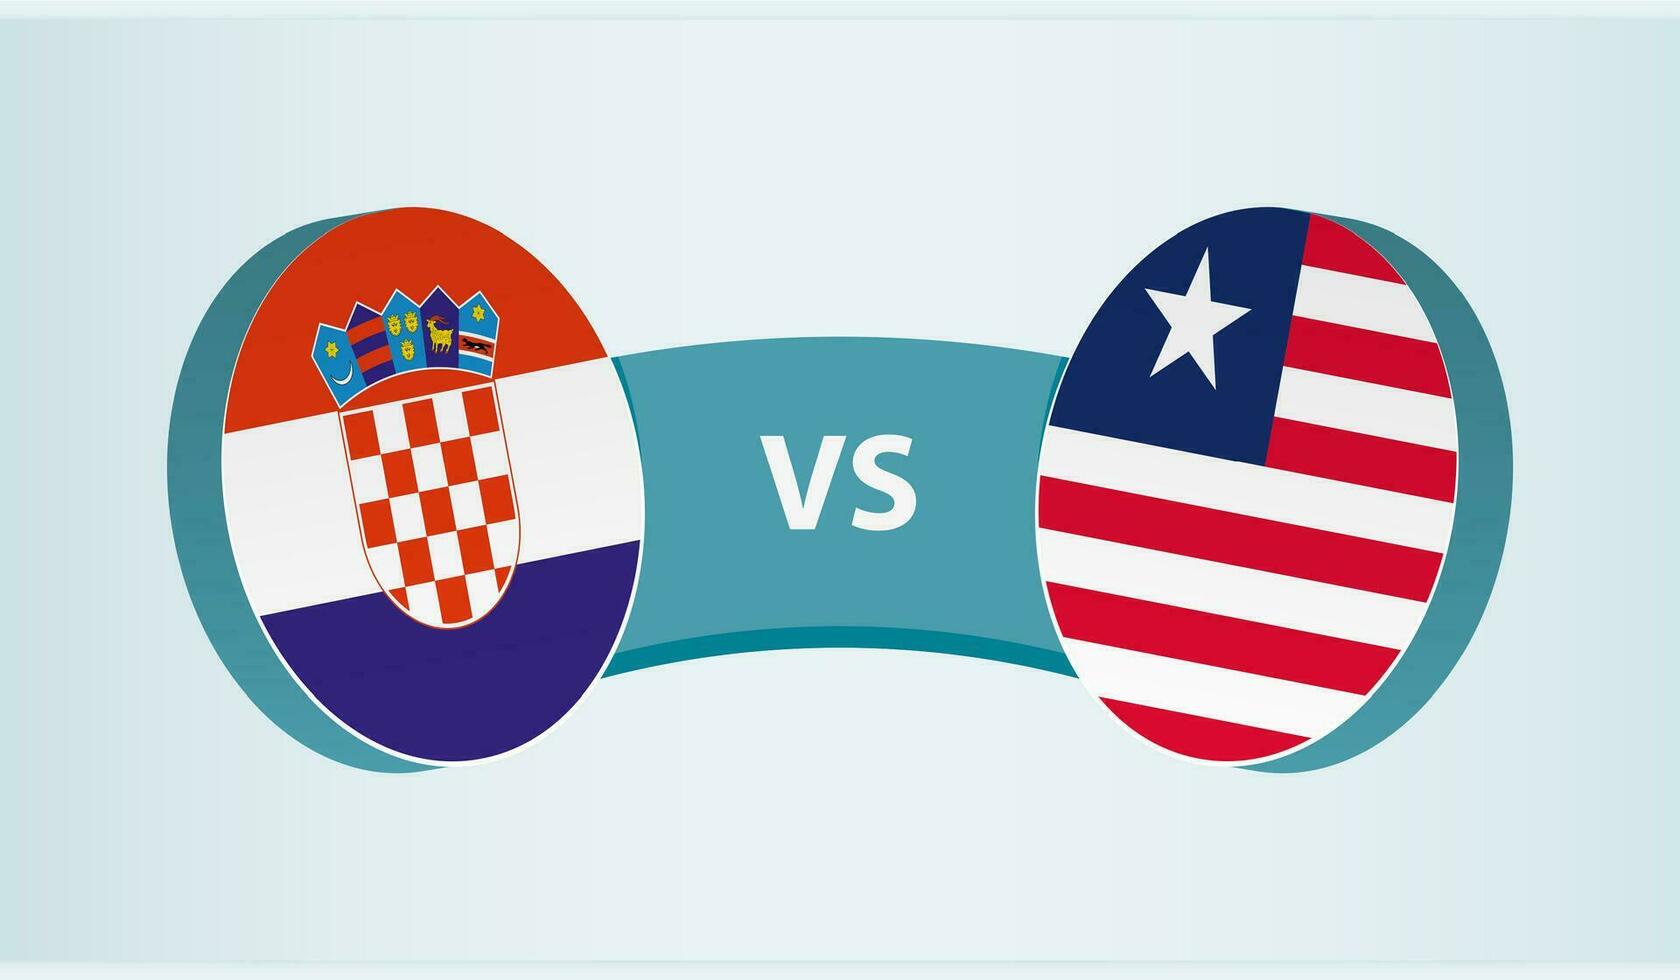 Croatia versus Liberia, team sports competition concept. vector